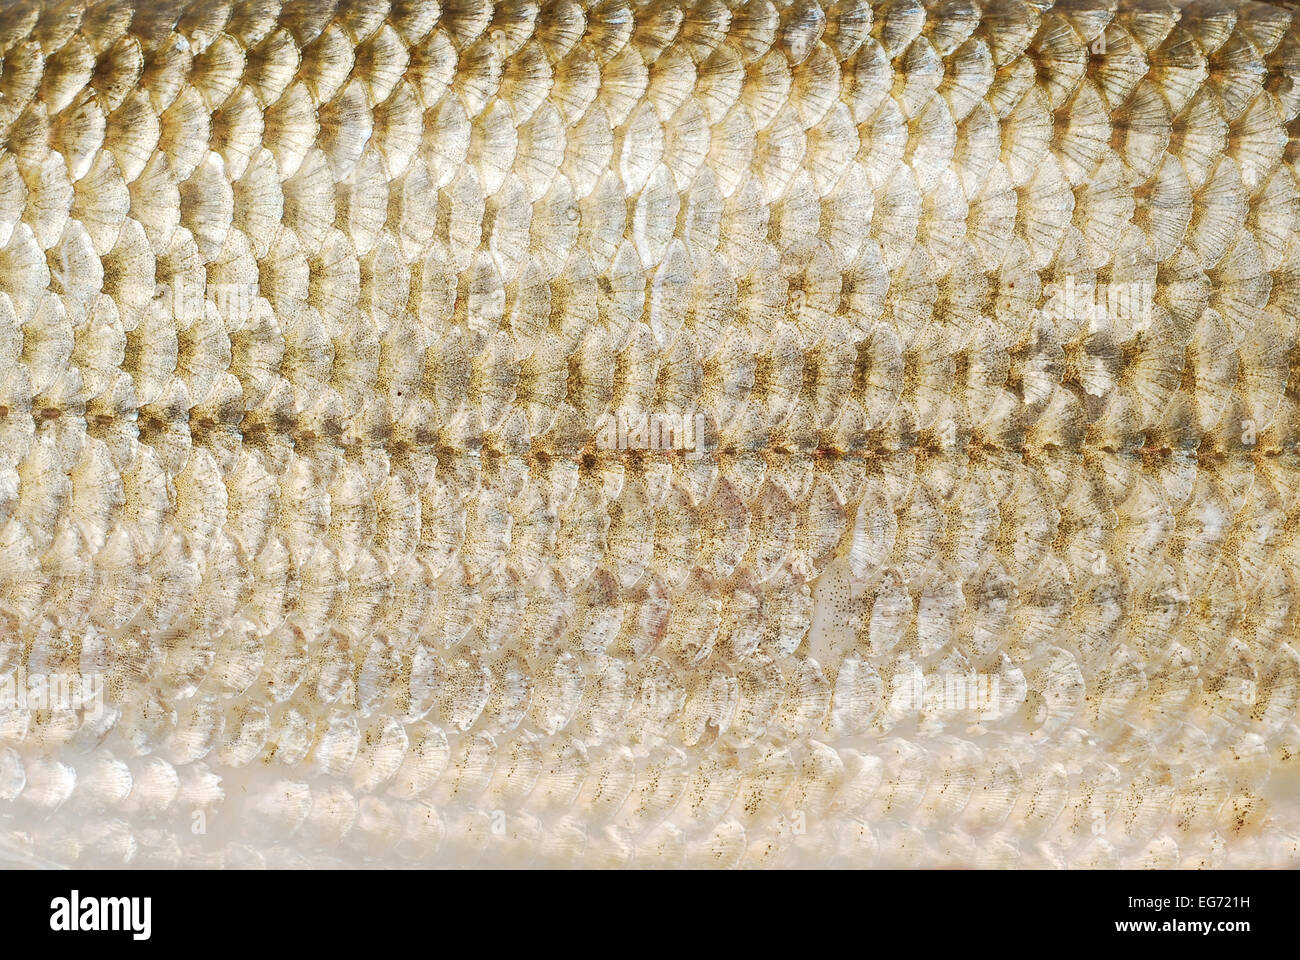 fish scale texture closeup detail Stock Photo - Alamy